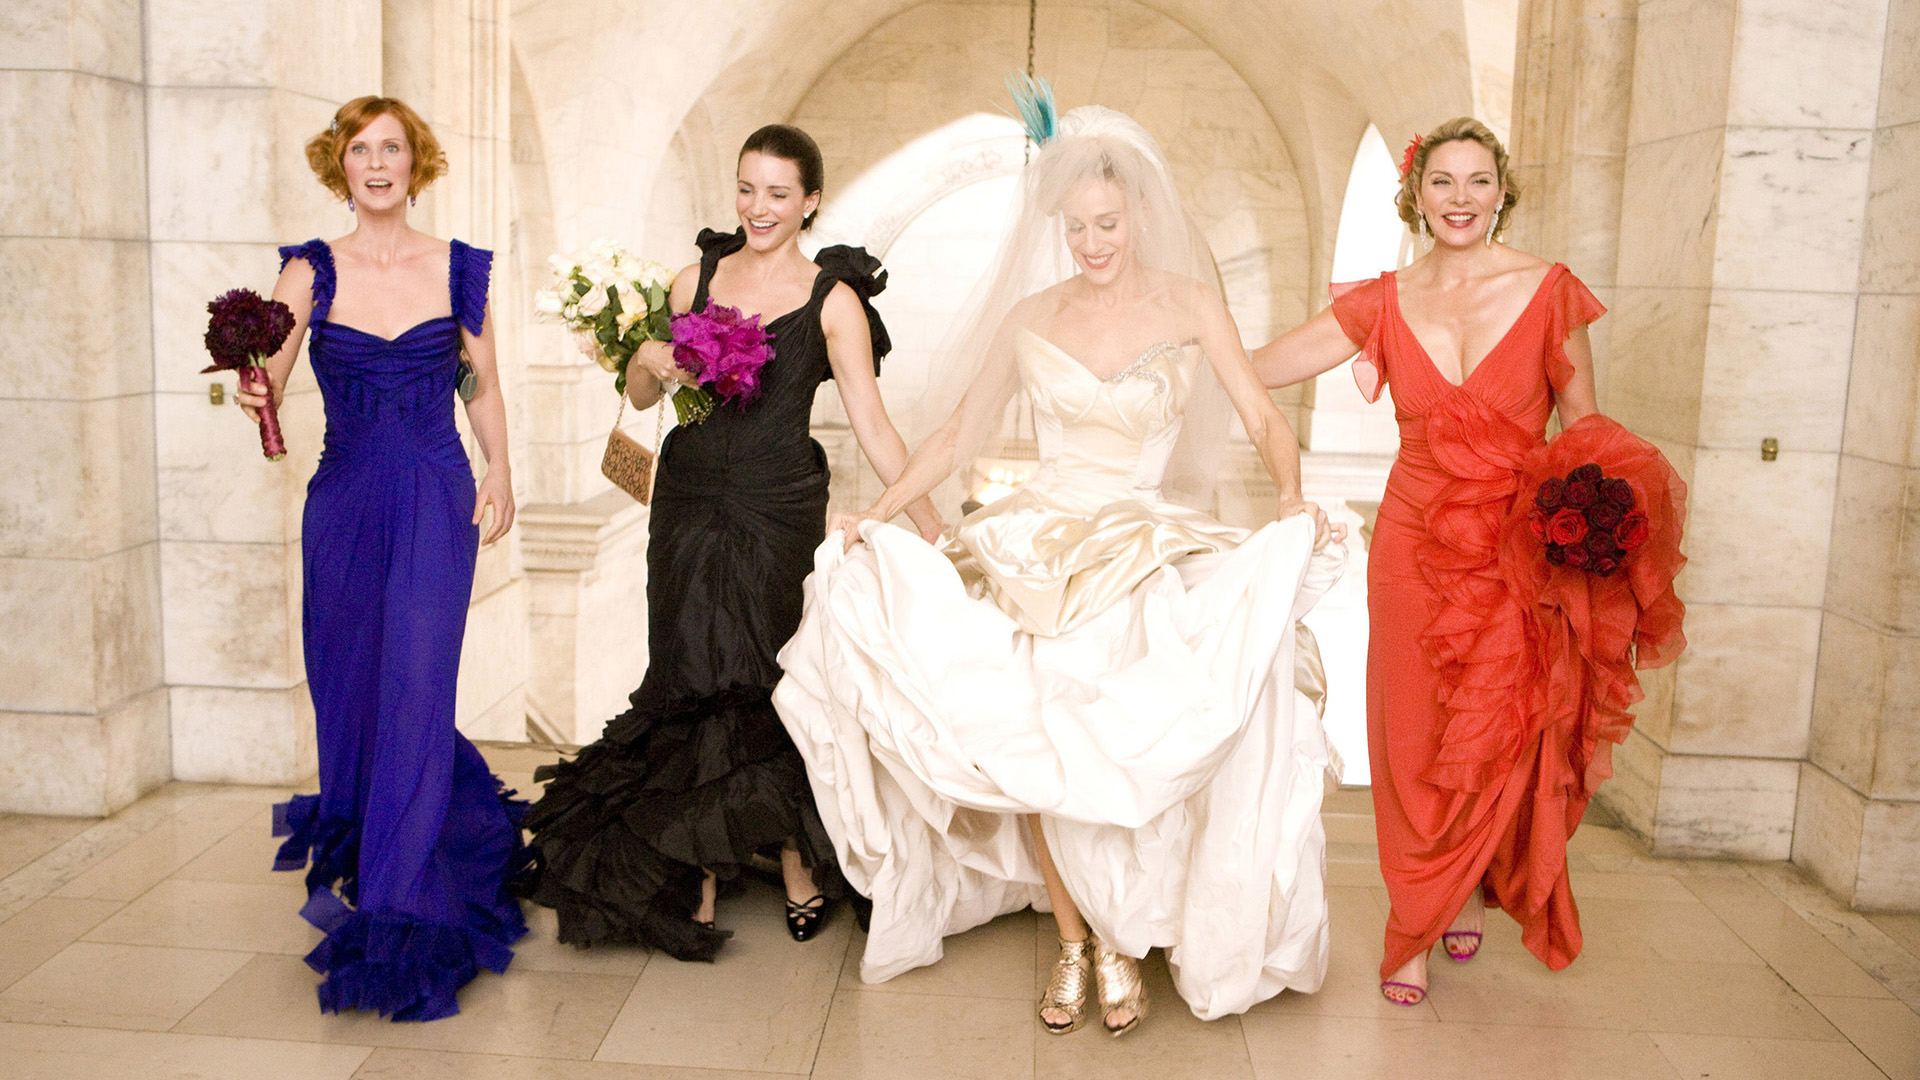 Sarah Jessica Parker's Black Wedding Dress: A Style Choice She Now Regrets